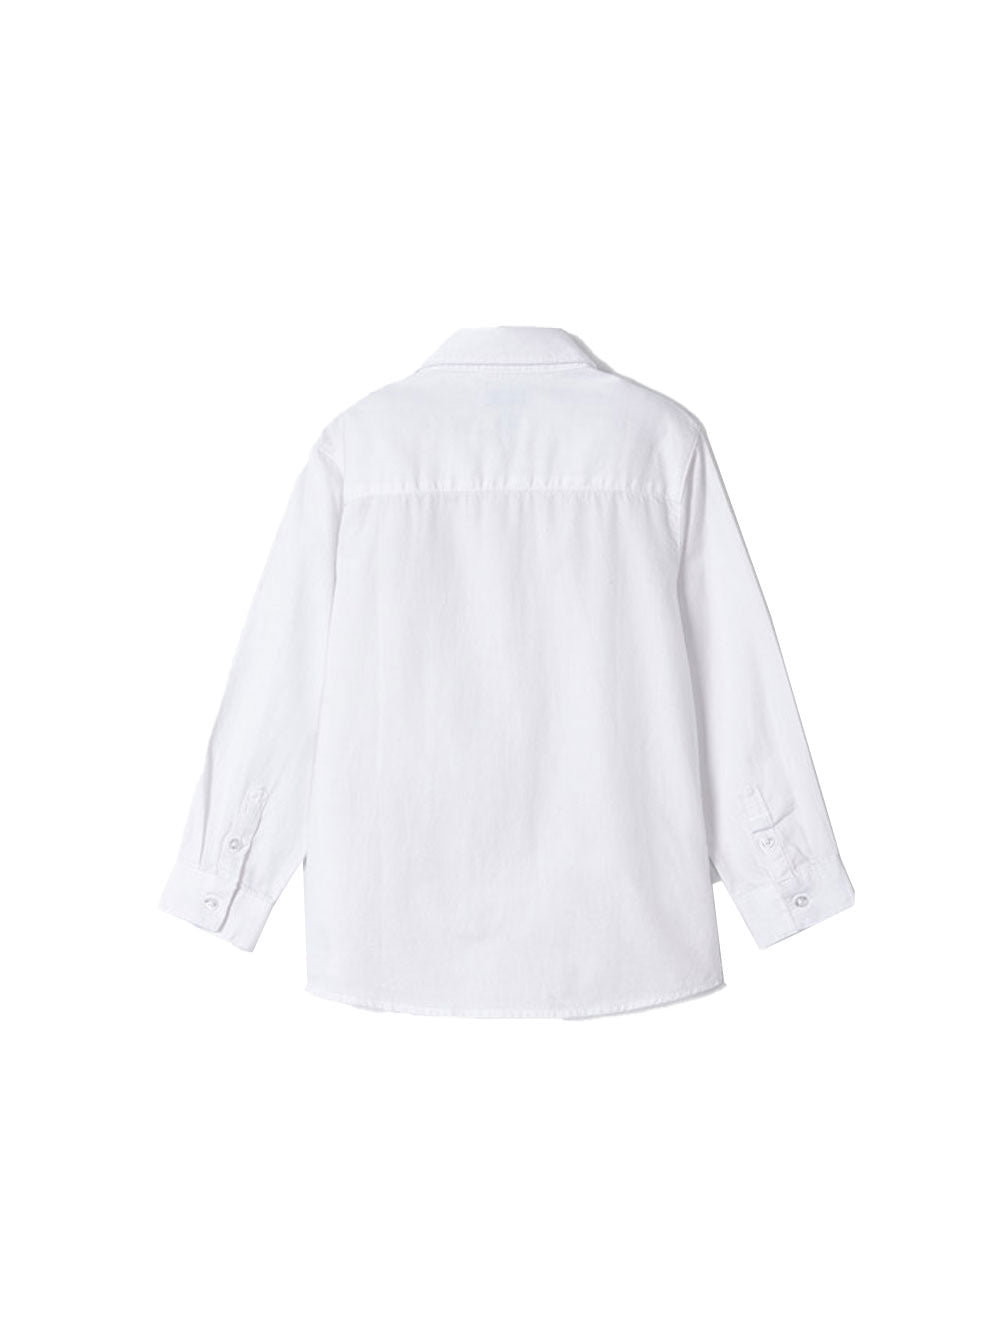 MAYORAL Mayoral camicia bambino basica bianco